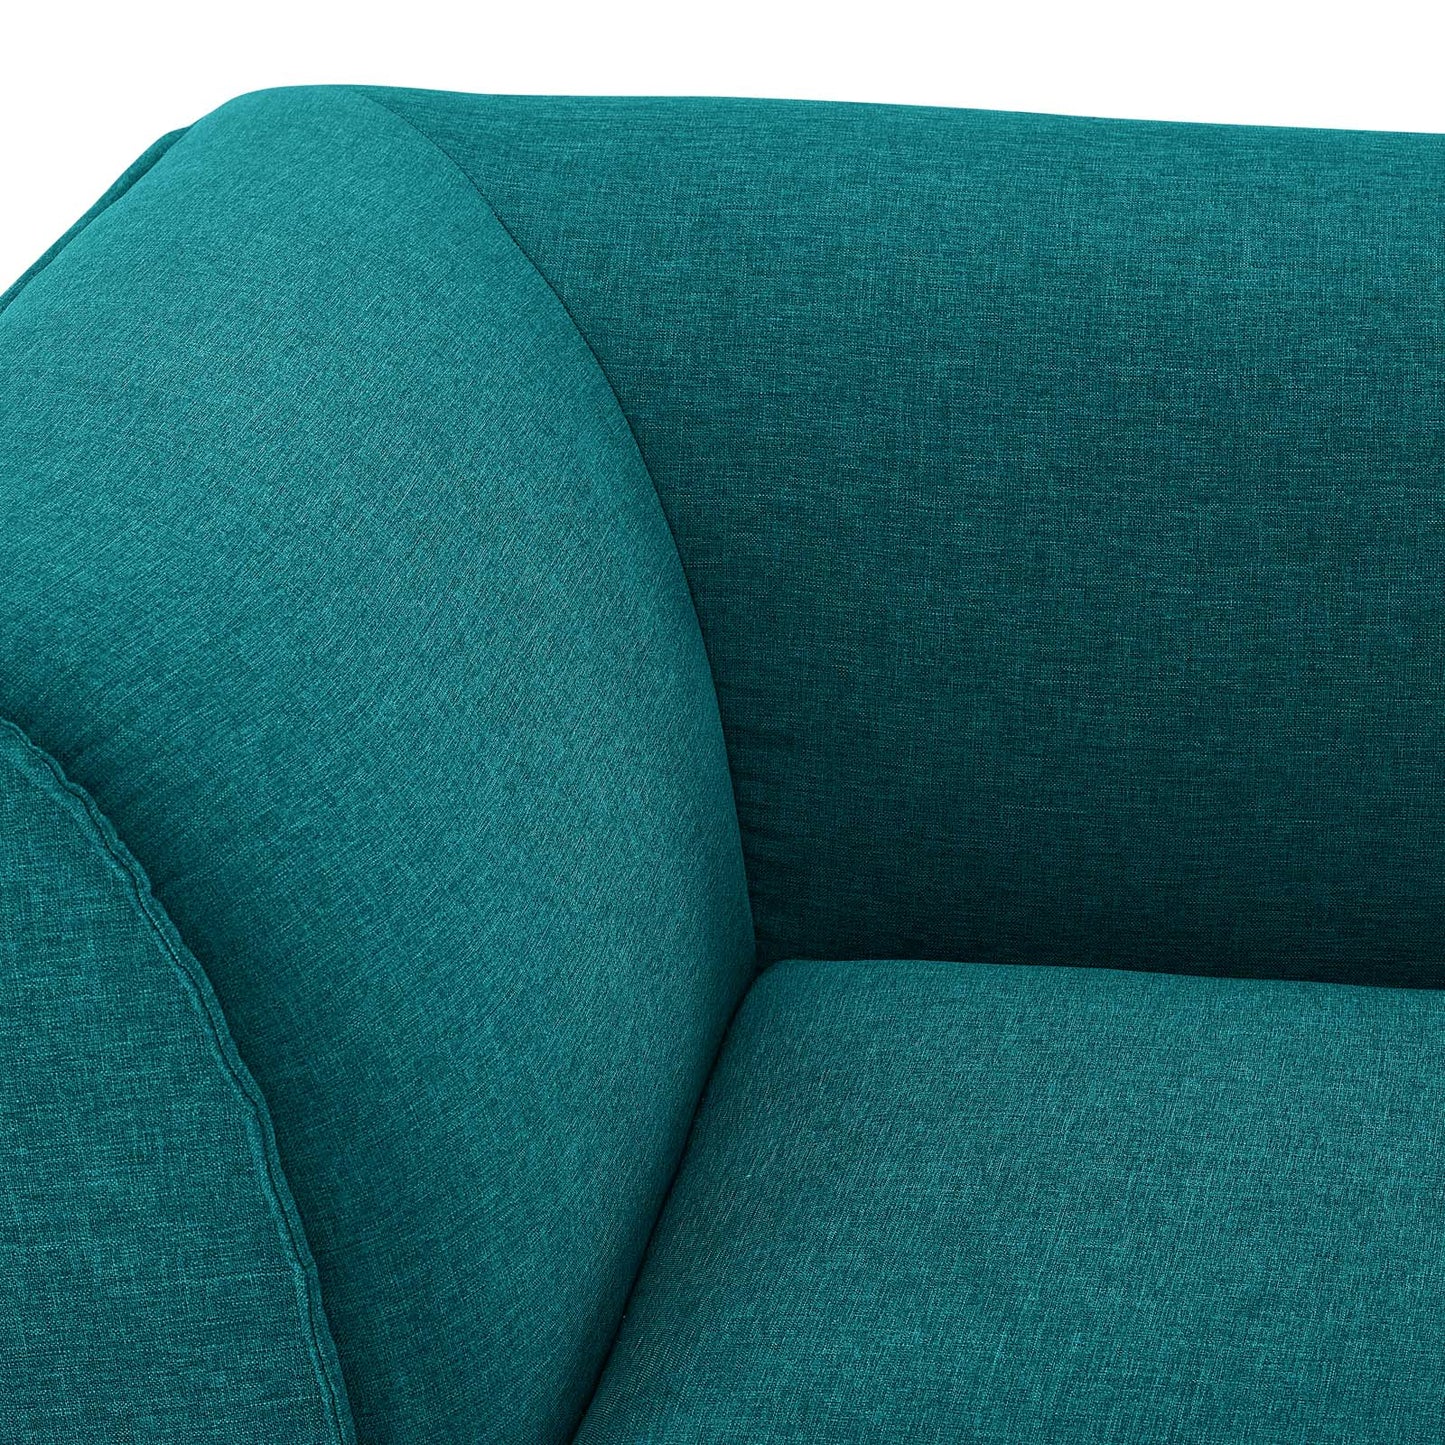 Comprise Corner Sectional Sofa Chair Teal EEI-4417-TEA